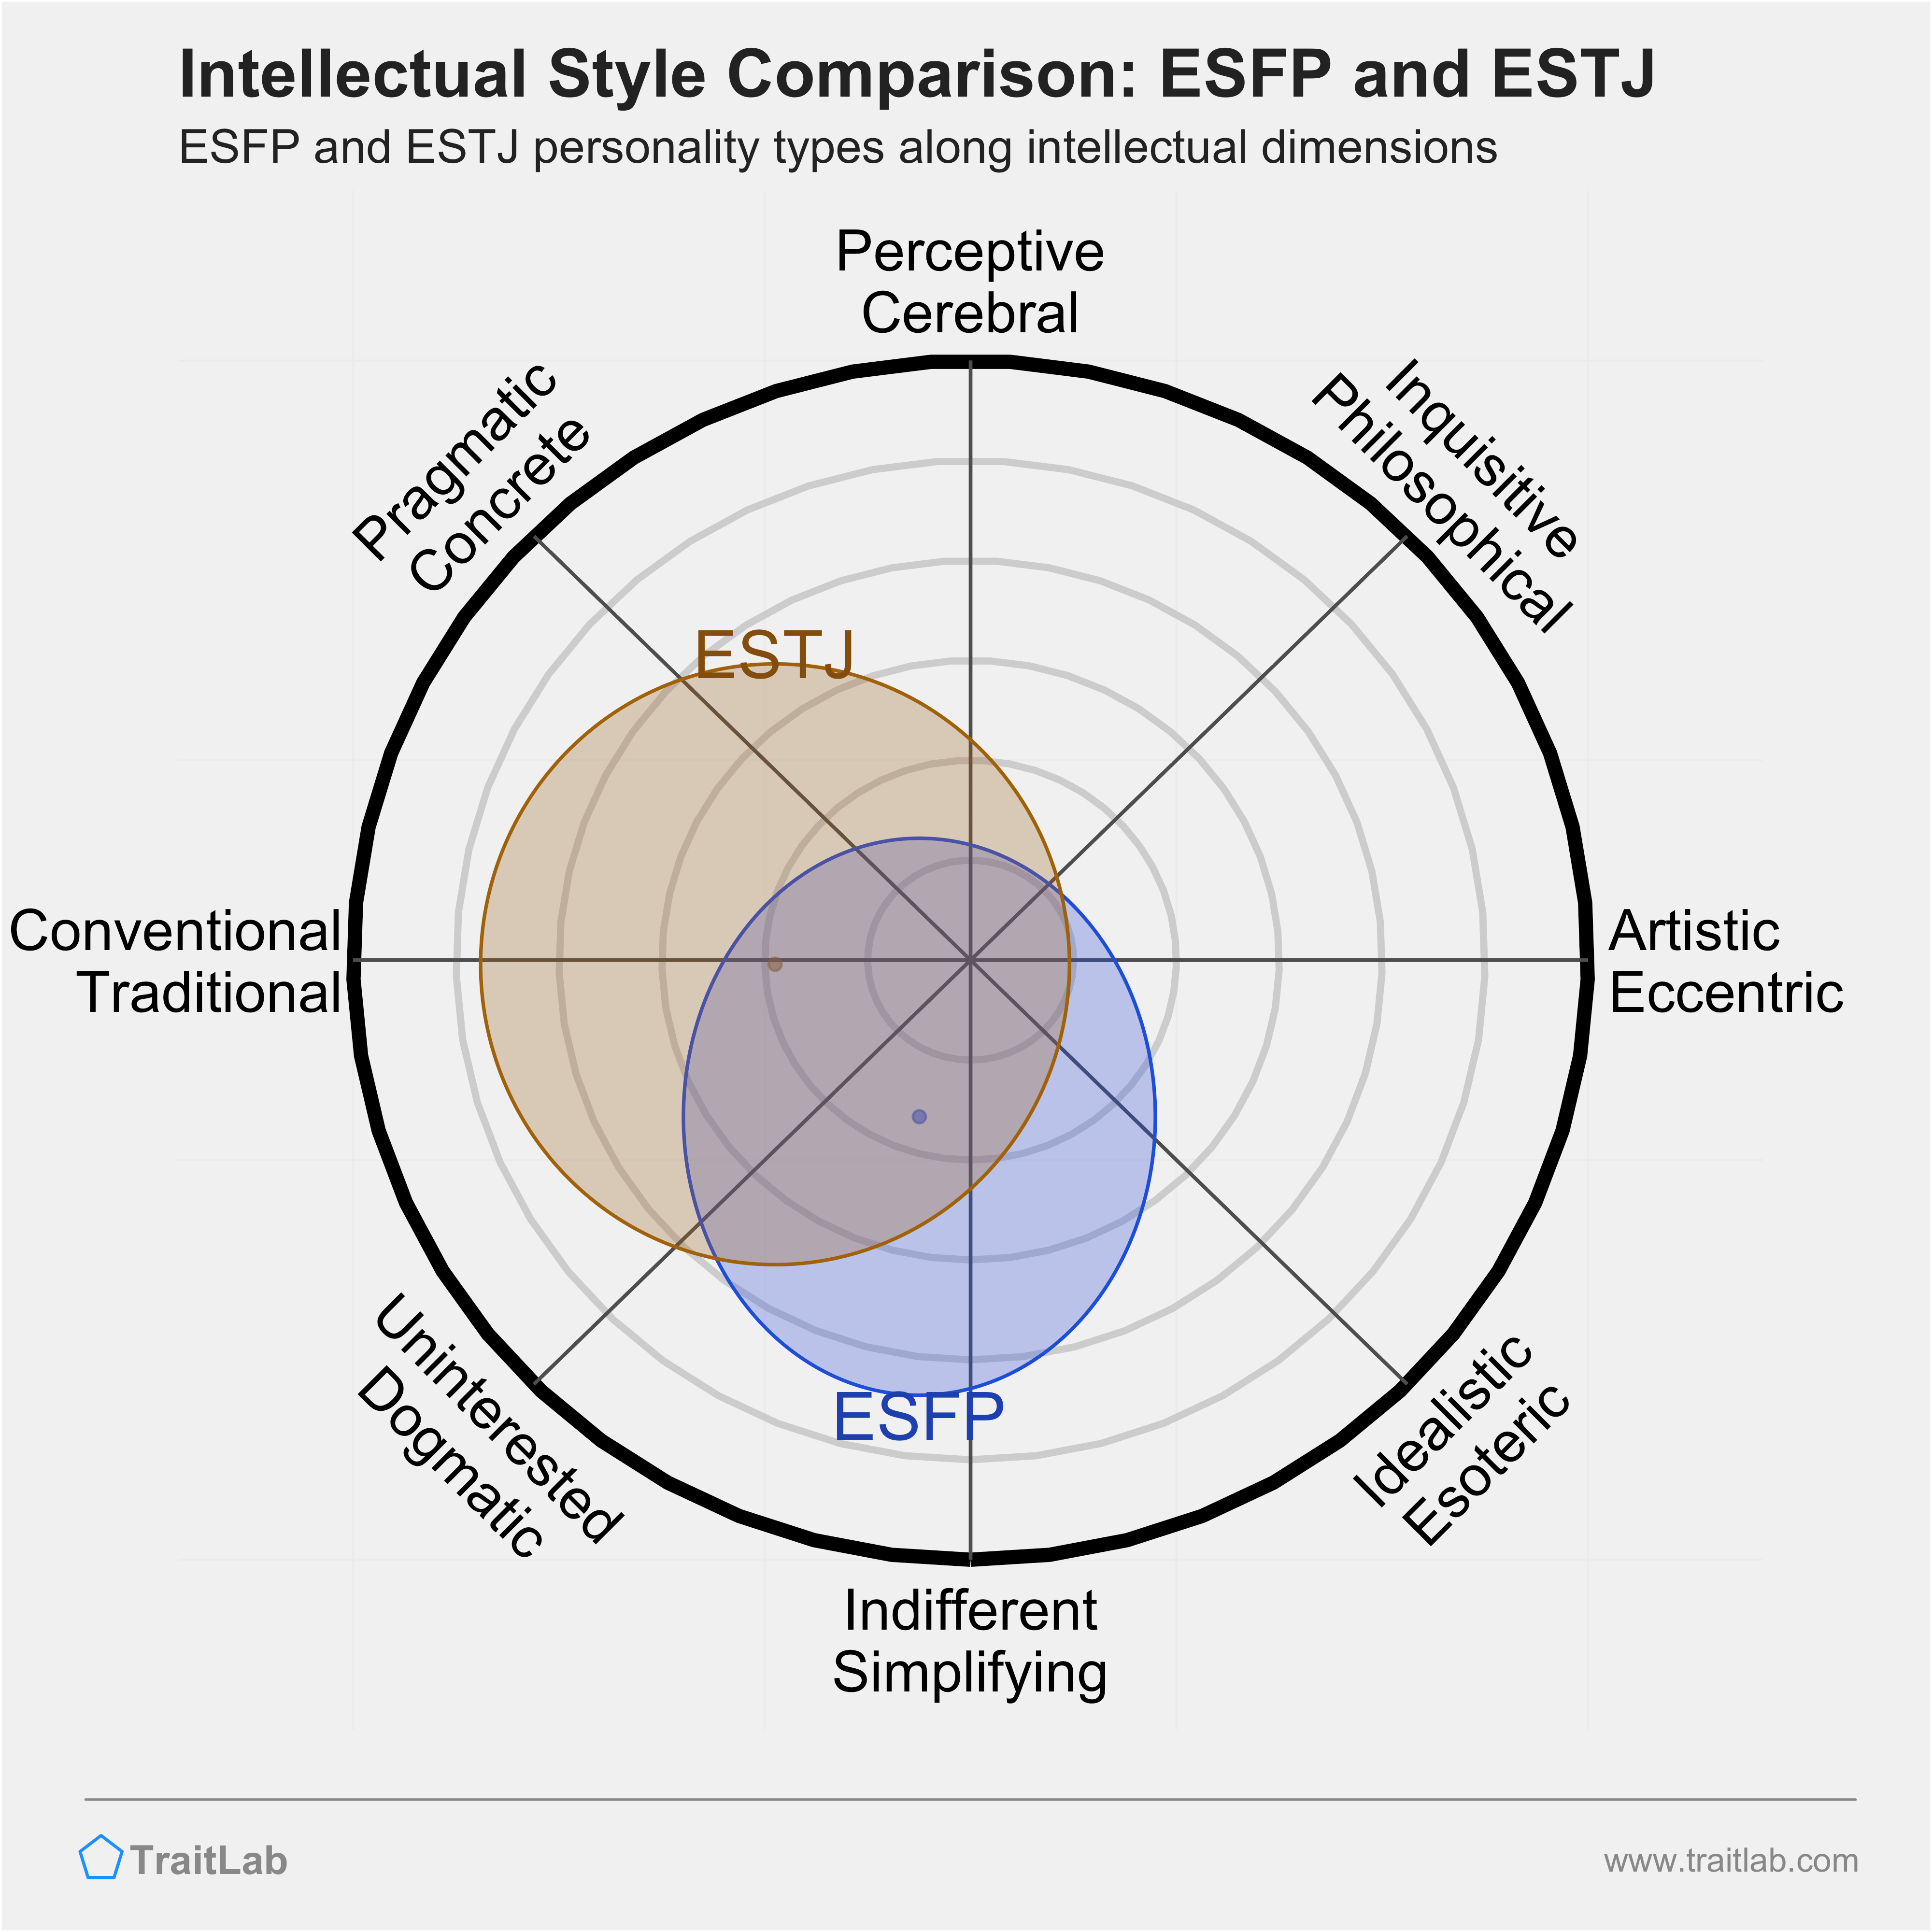 ESFP and ESTJ comparison across intellectual dimensions